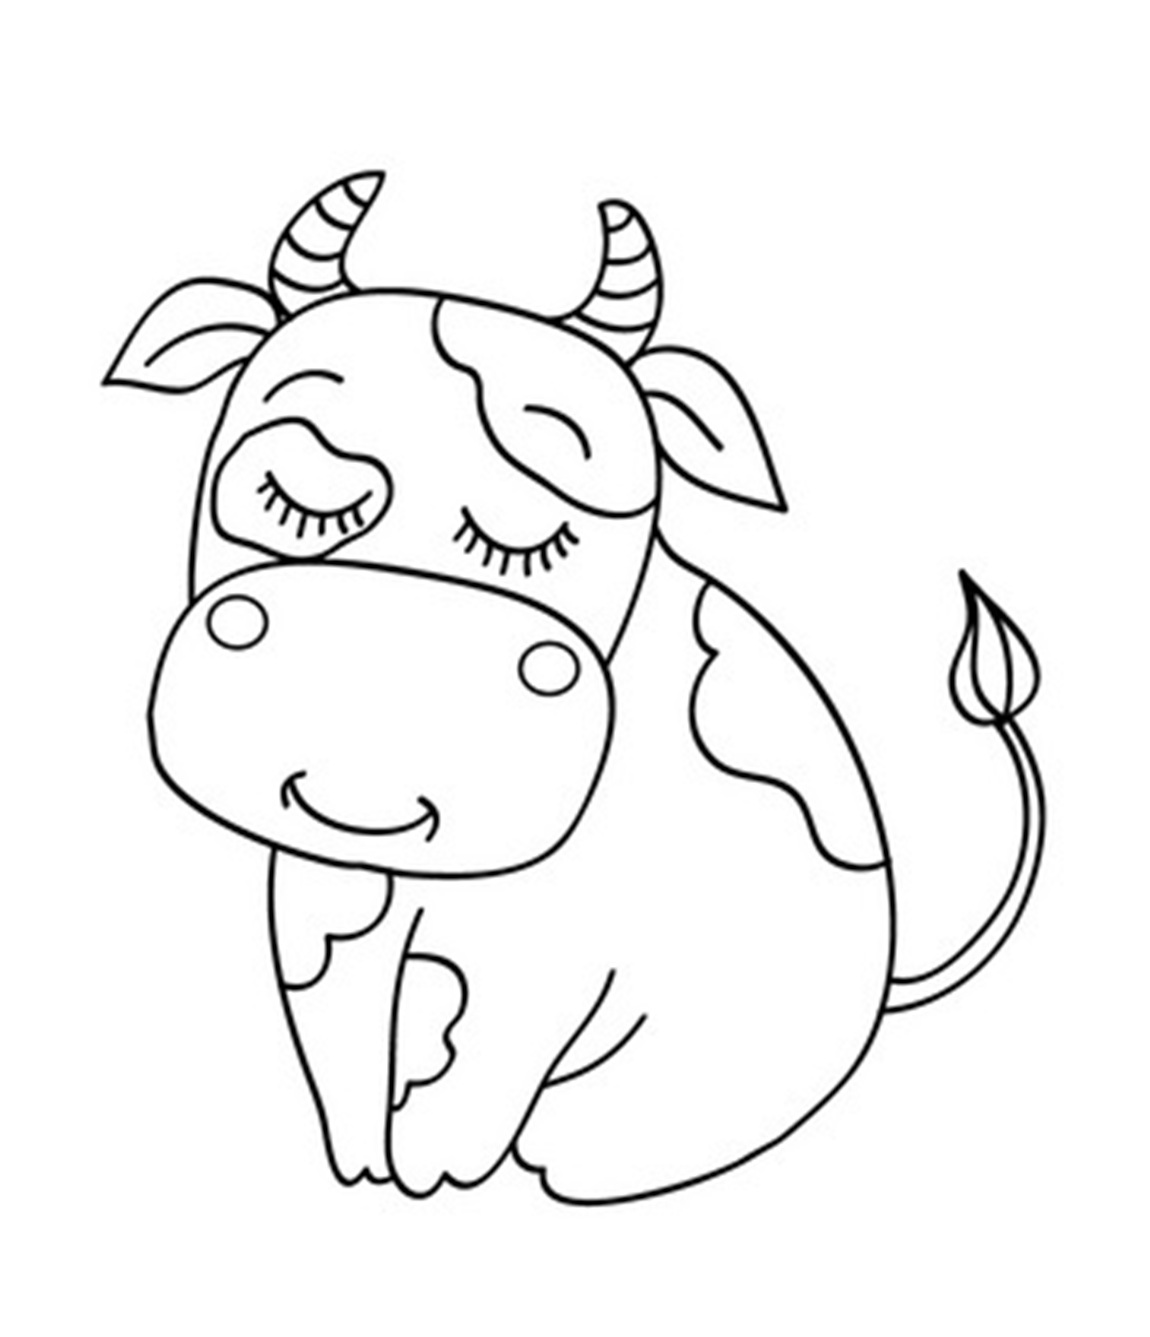 Cow S Cutie Animaldc7e Coloring Page